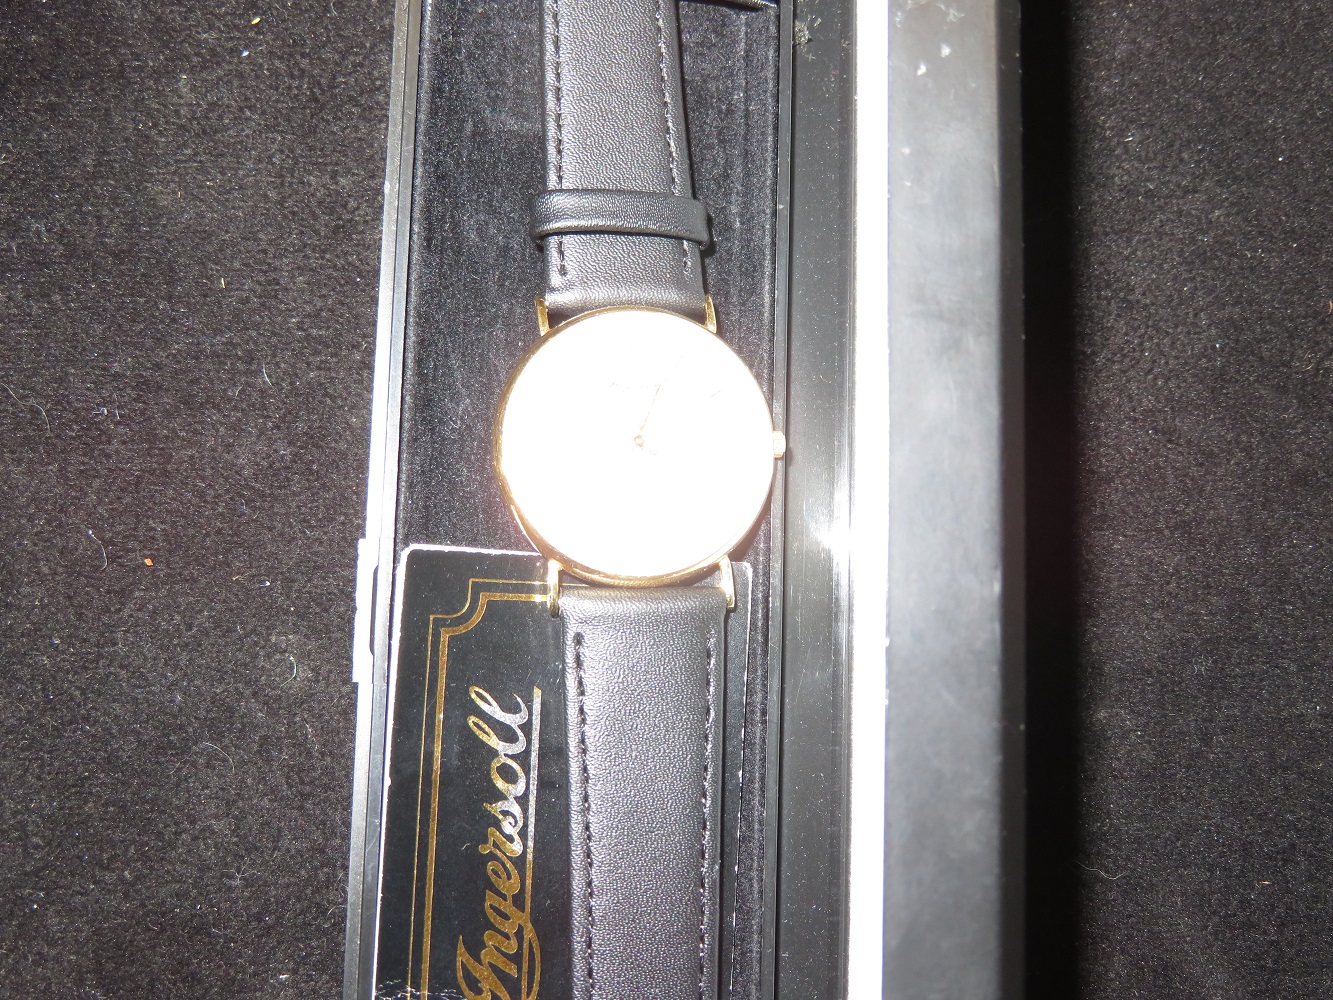 Gents 9ct Gold Ingersol wristwatch (Needs Battery)